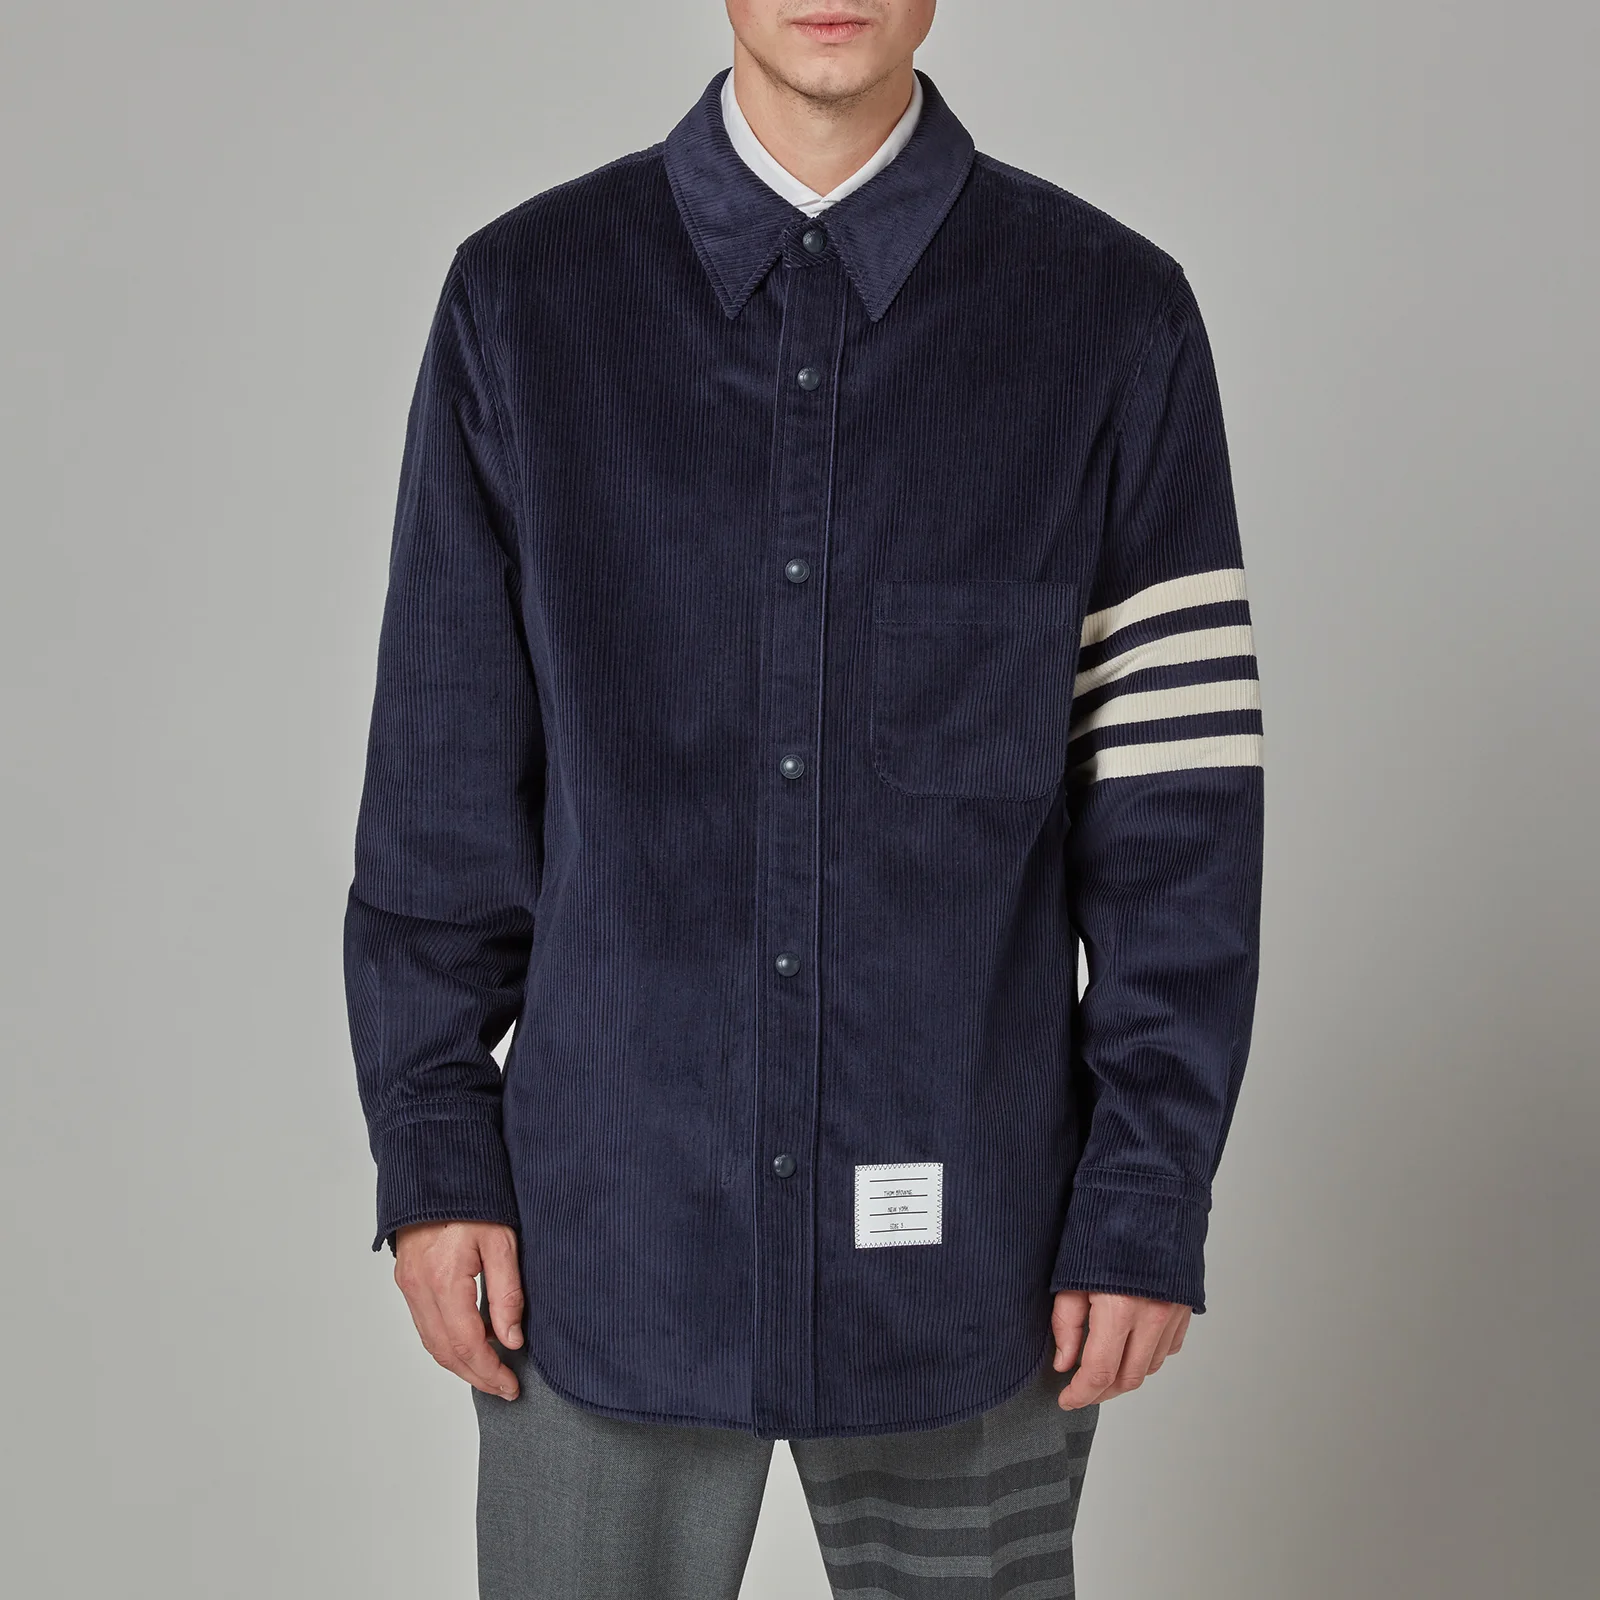 Thom Browne Men's Four-Bar Snap Front Shirt Jacket - Navy Image 1